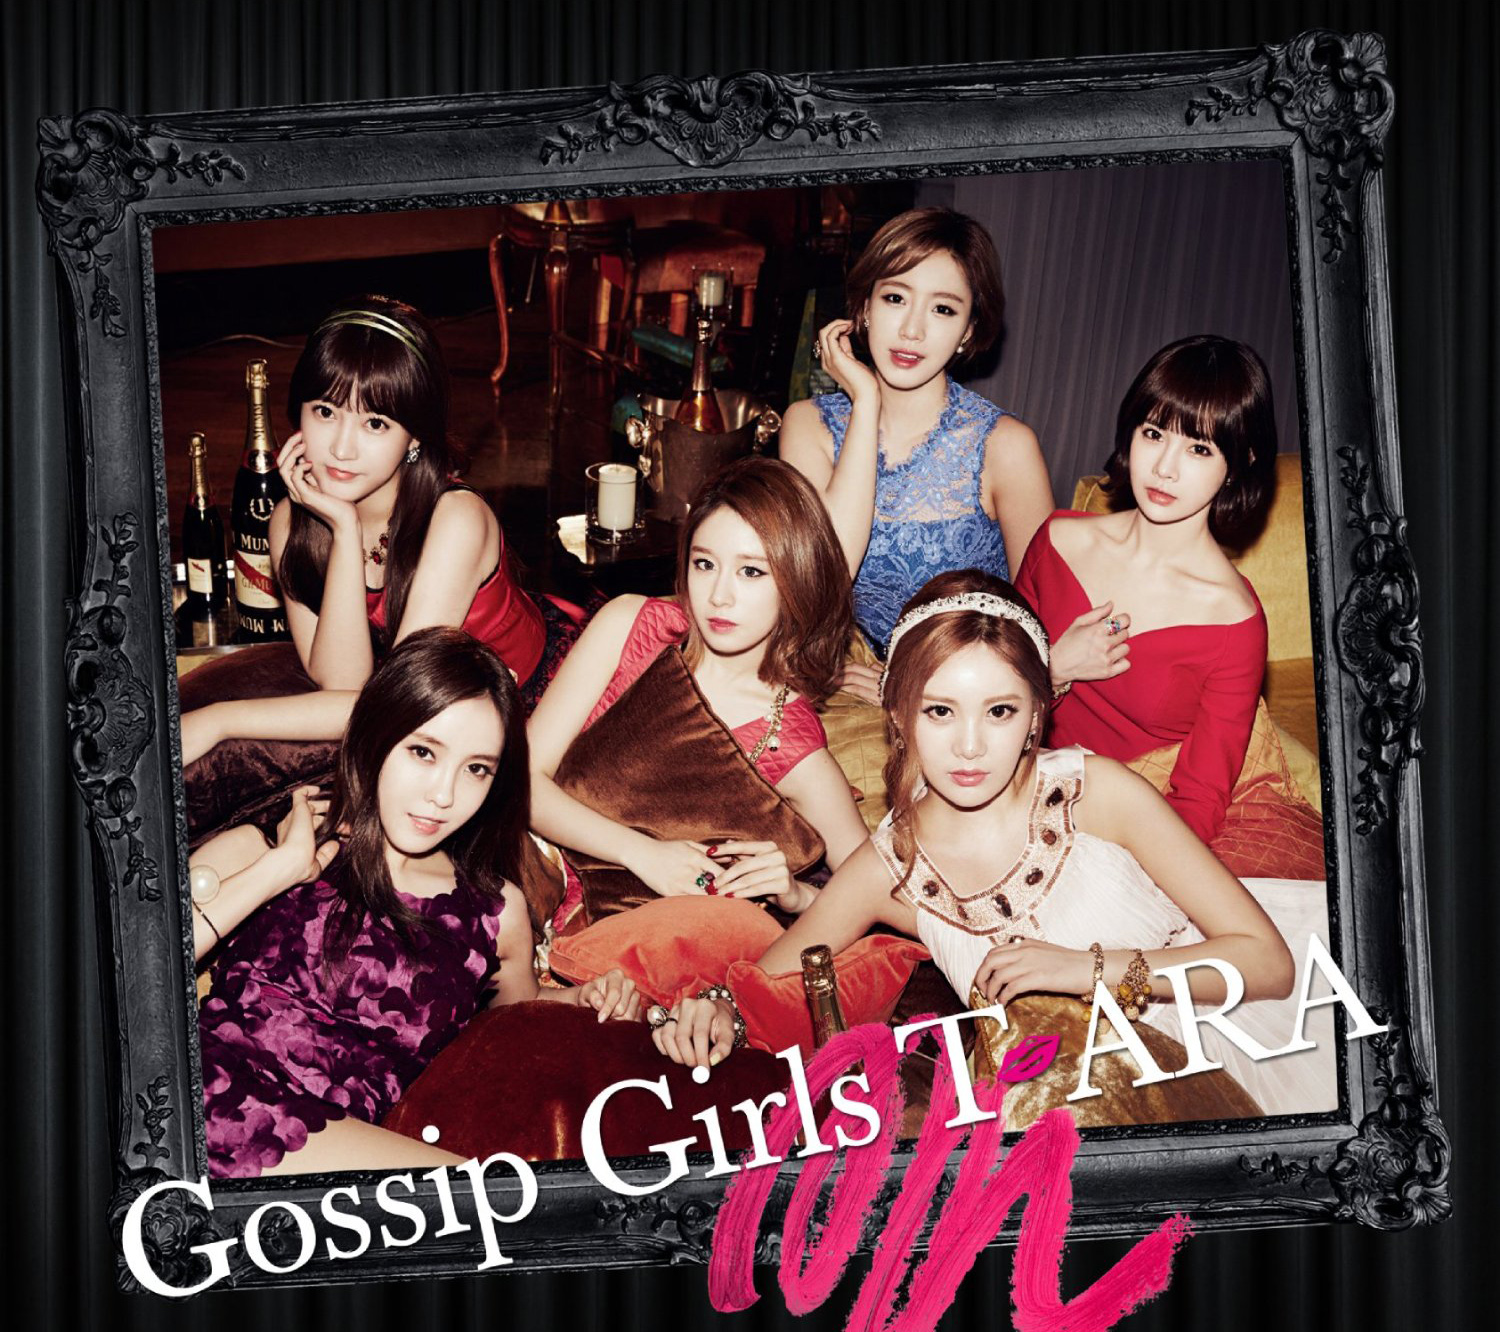 20171211.0530.1 T-ara - Gossip Girls (Sapphire edition) (DVD) (JPOP.ru) cover 3.jpg